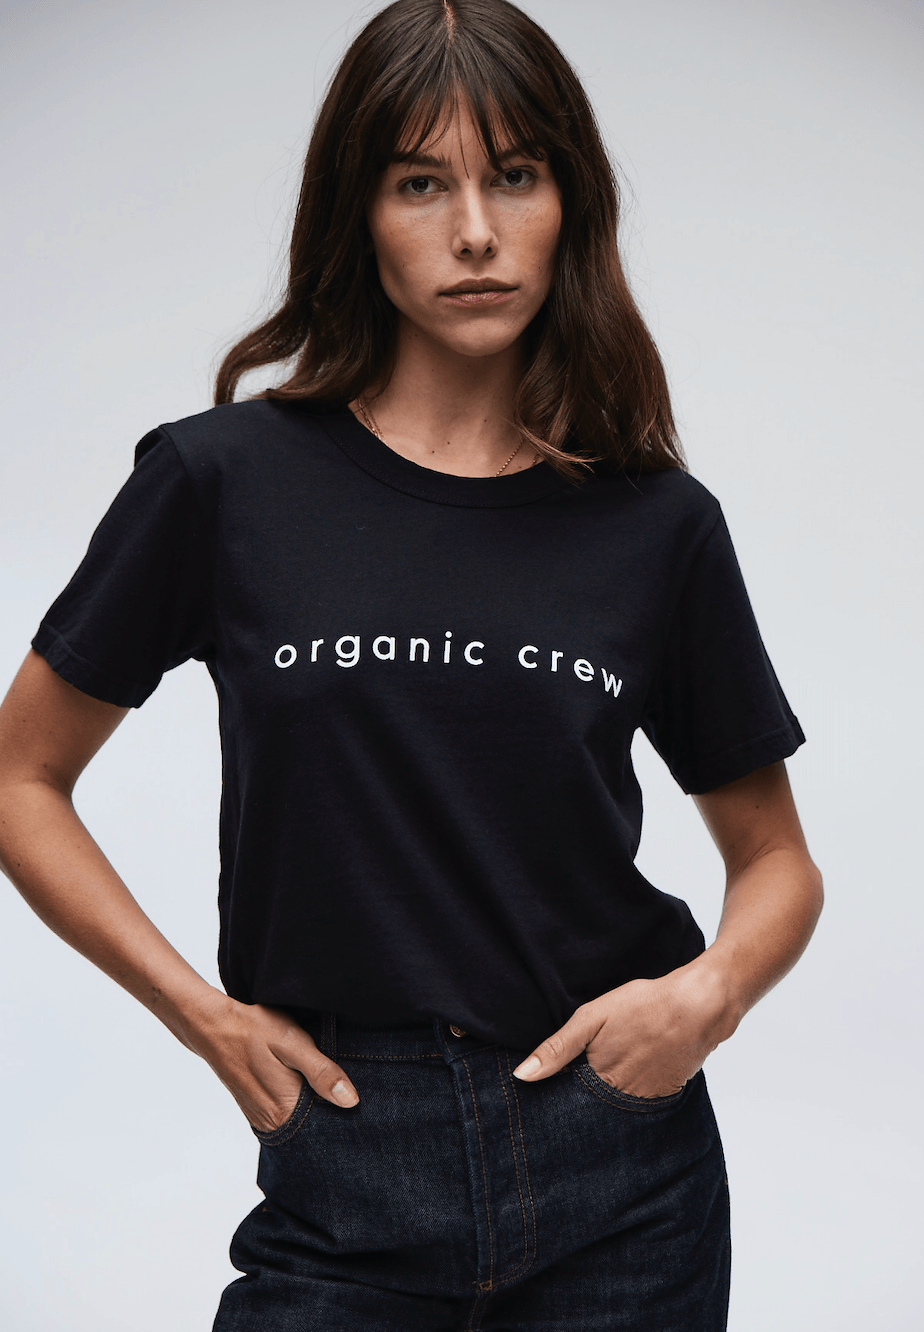 Super Relaxed Tee Black OC Tee Shirt Organic Crew 